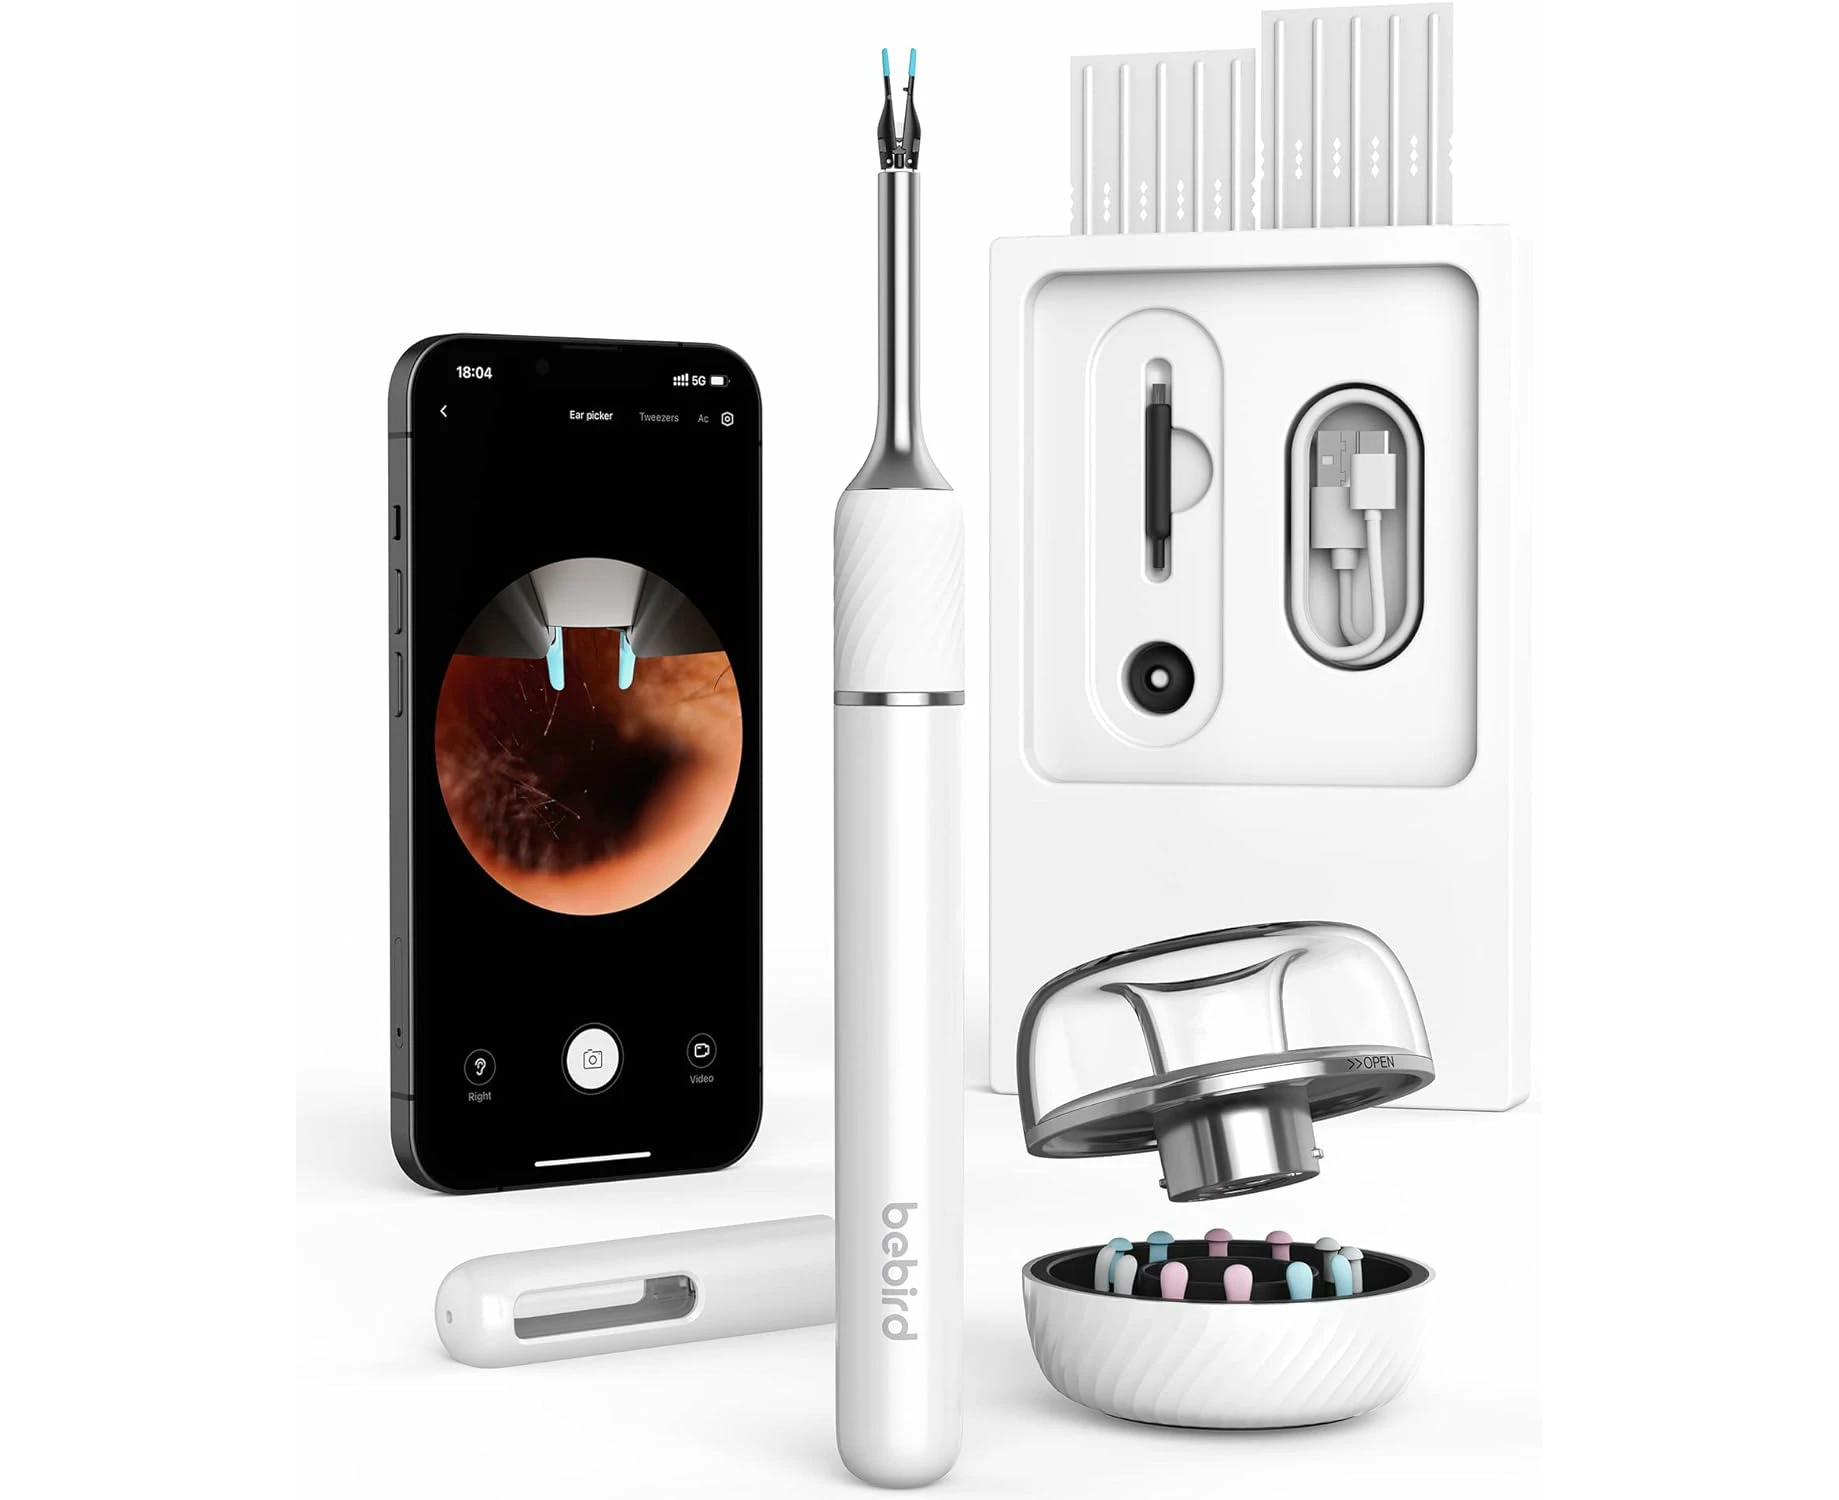 Buy BeBird R1 Wireless Otoscope Ear Cleaner Online for Rs 2,118